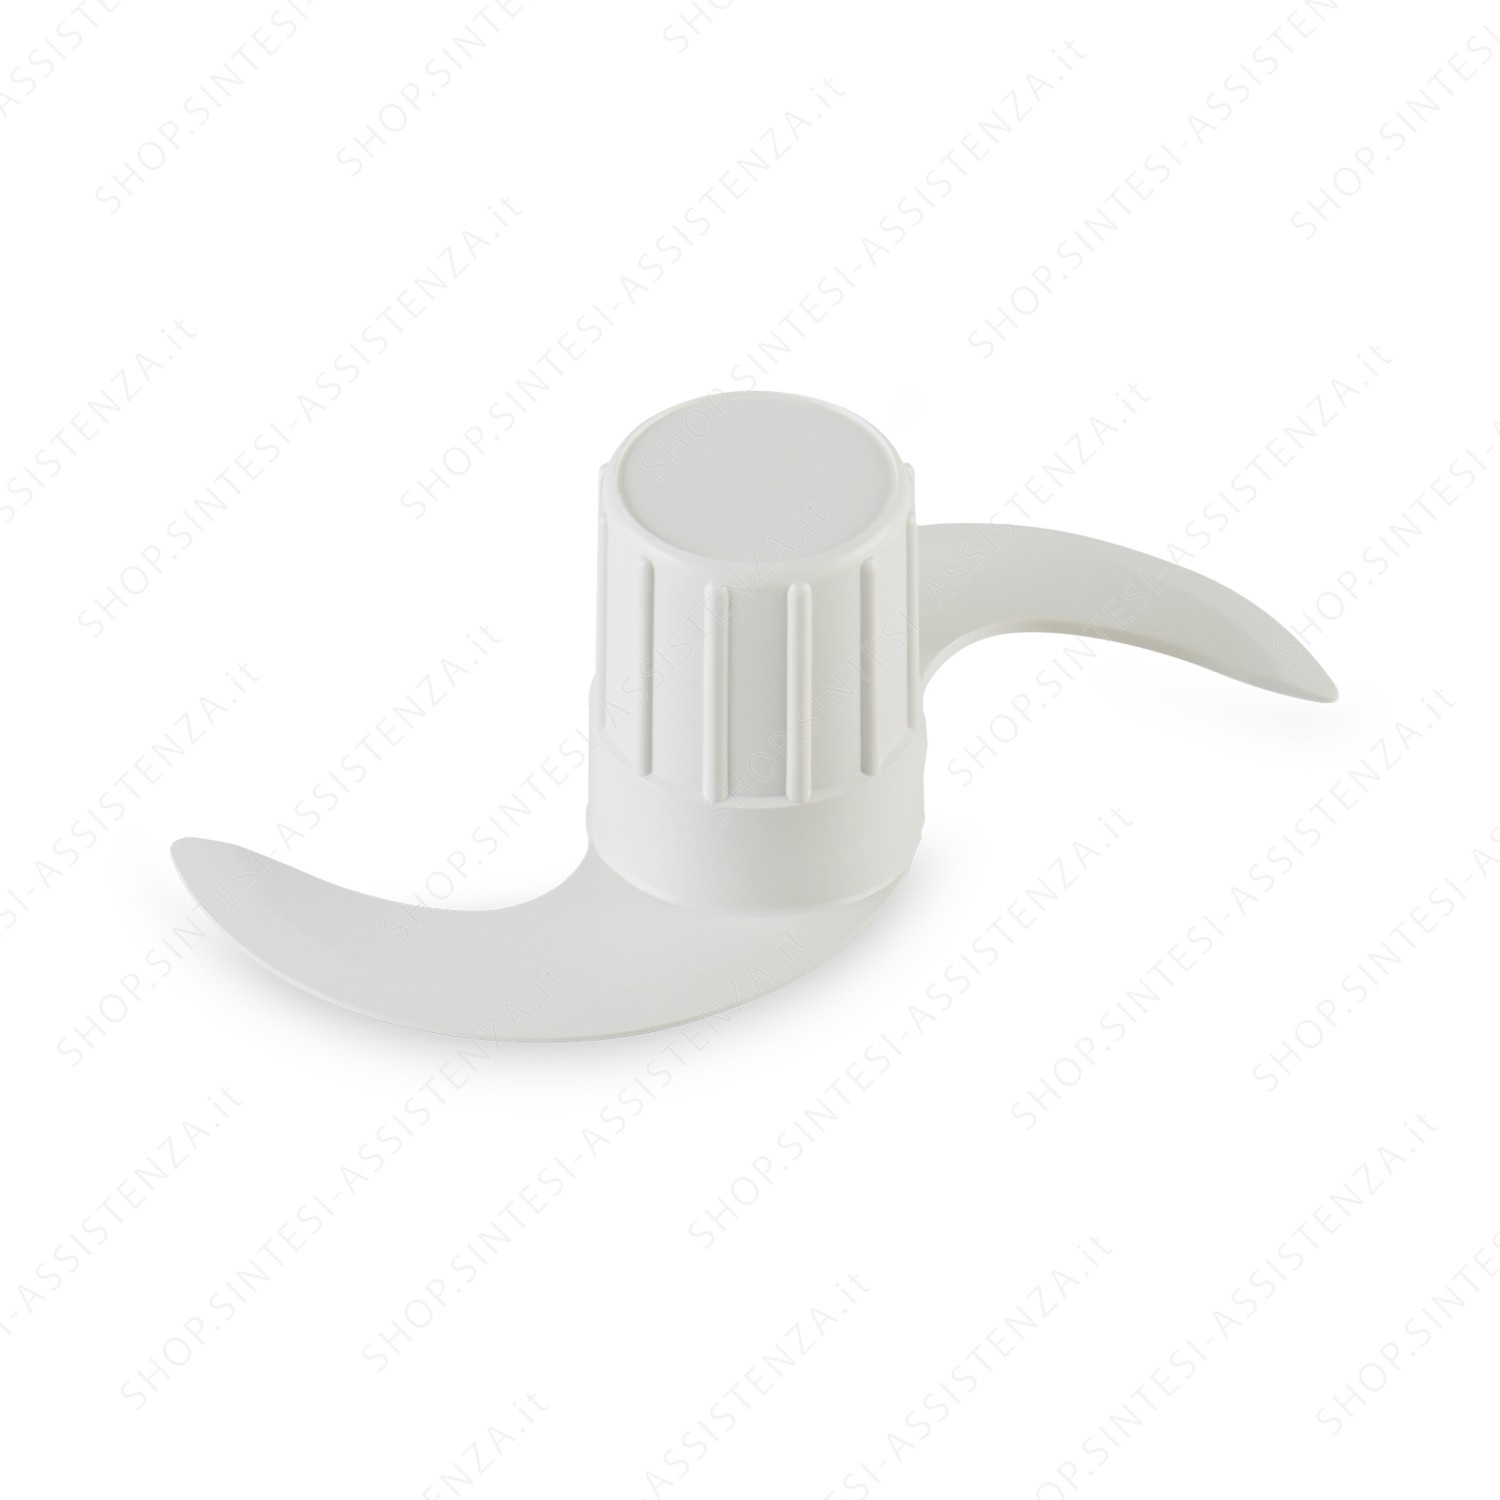 copy of STEEL BLADE KNIFE FOR KITCHEN ROBOT CUISILUX IONA IPOH BLENDER 3002110040 - 1095110041